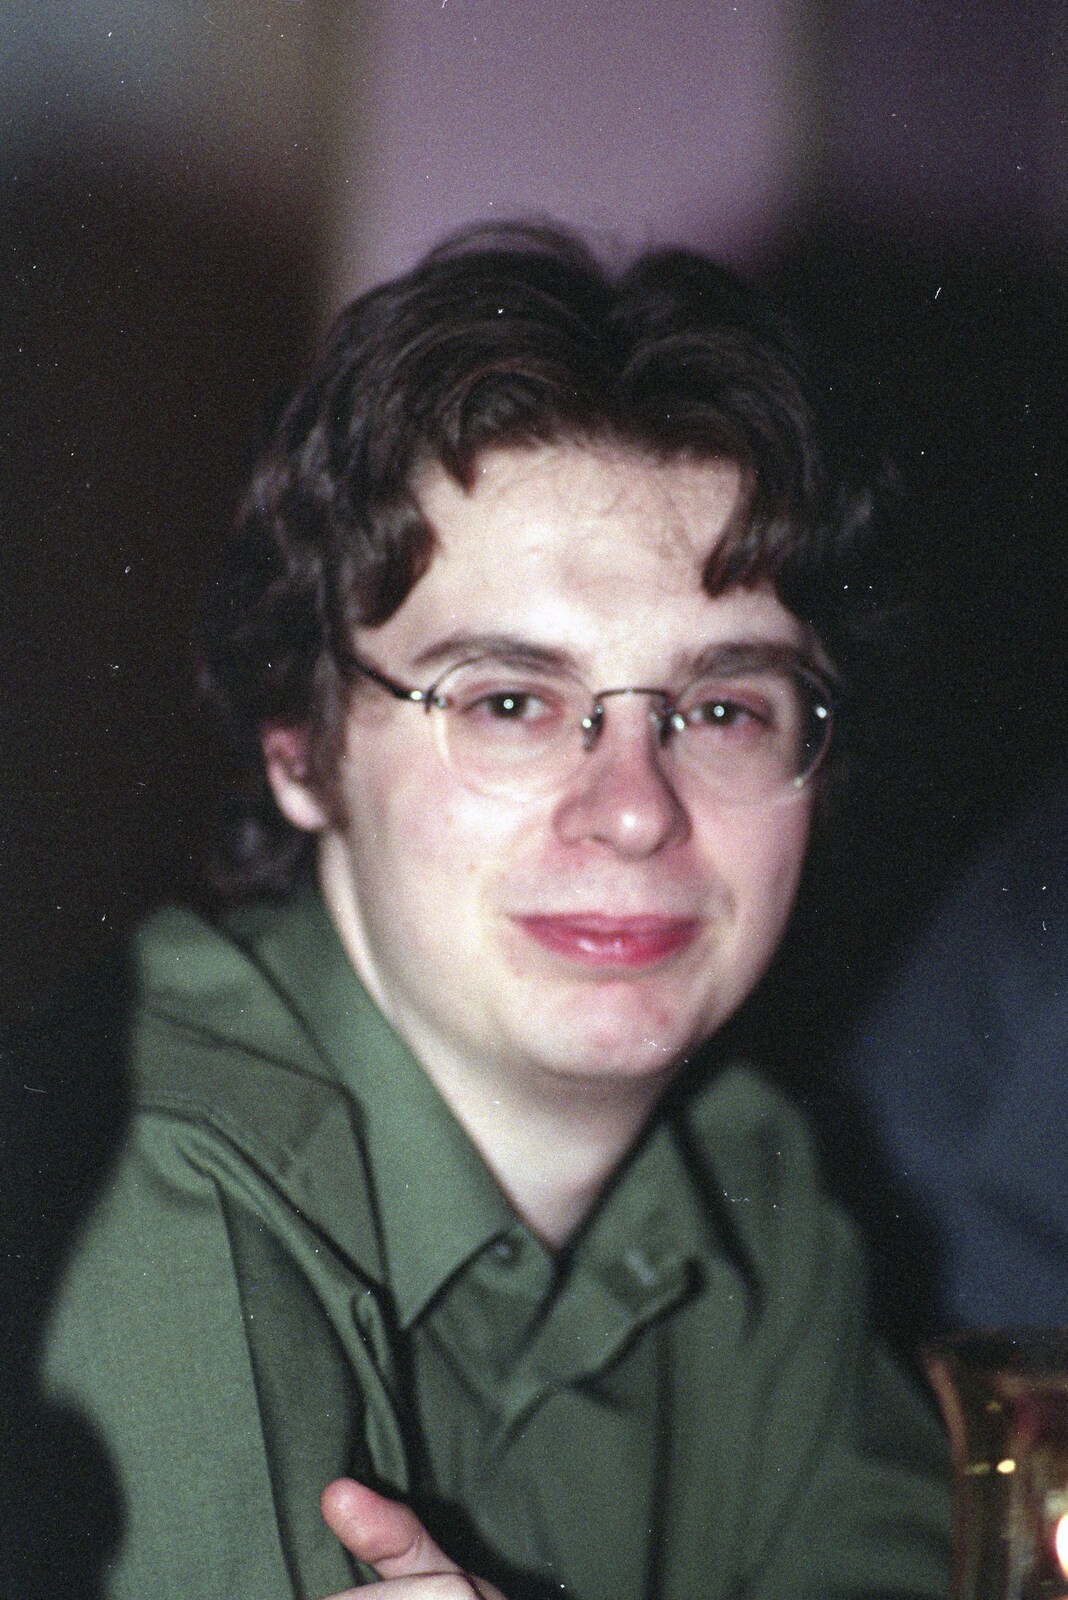 A slightly fuzzy Roy from CISU at the Dhaka Diner, Tacket Street, Ipswich - 25th May 2000